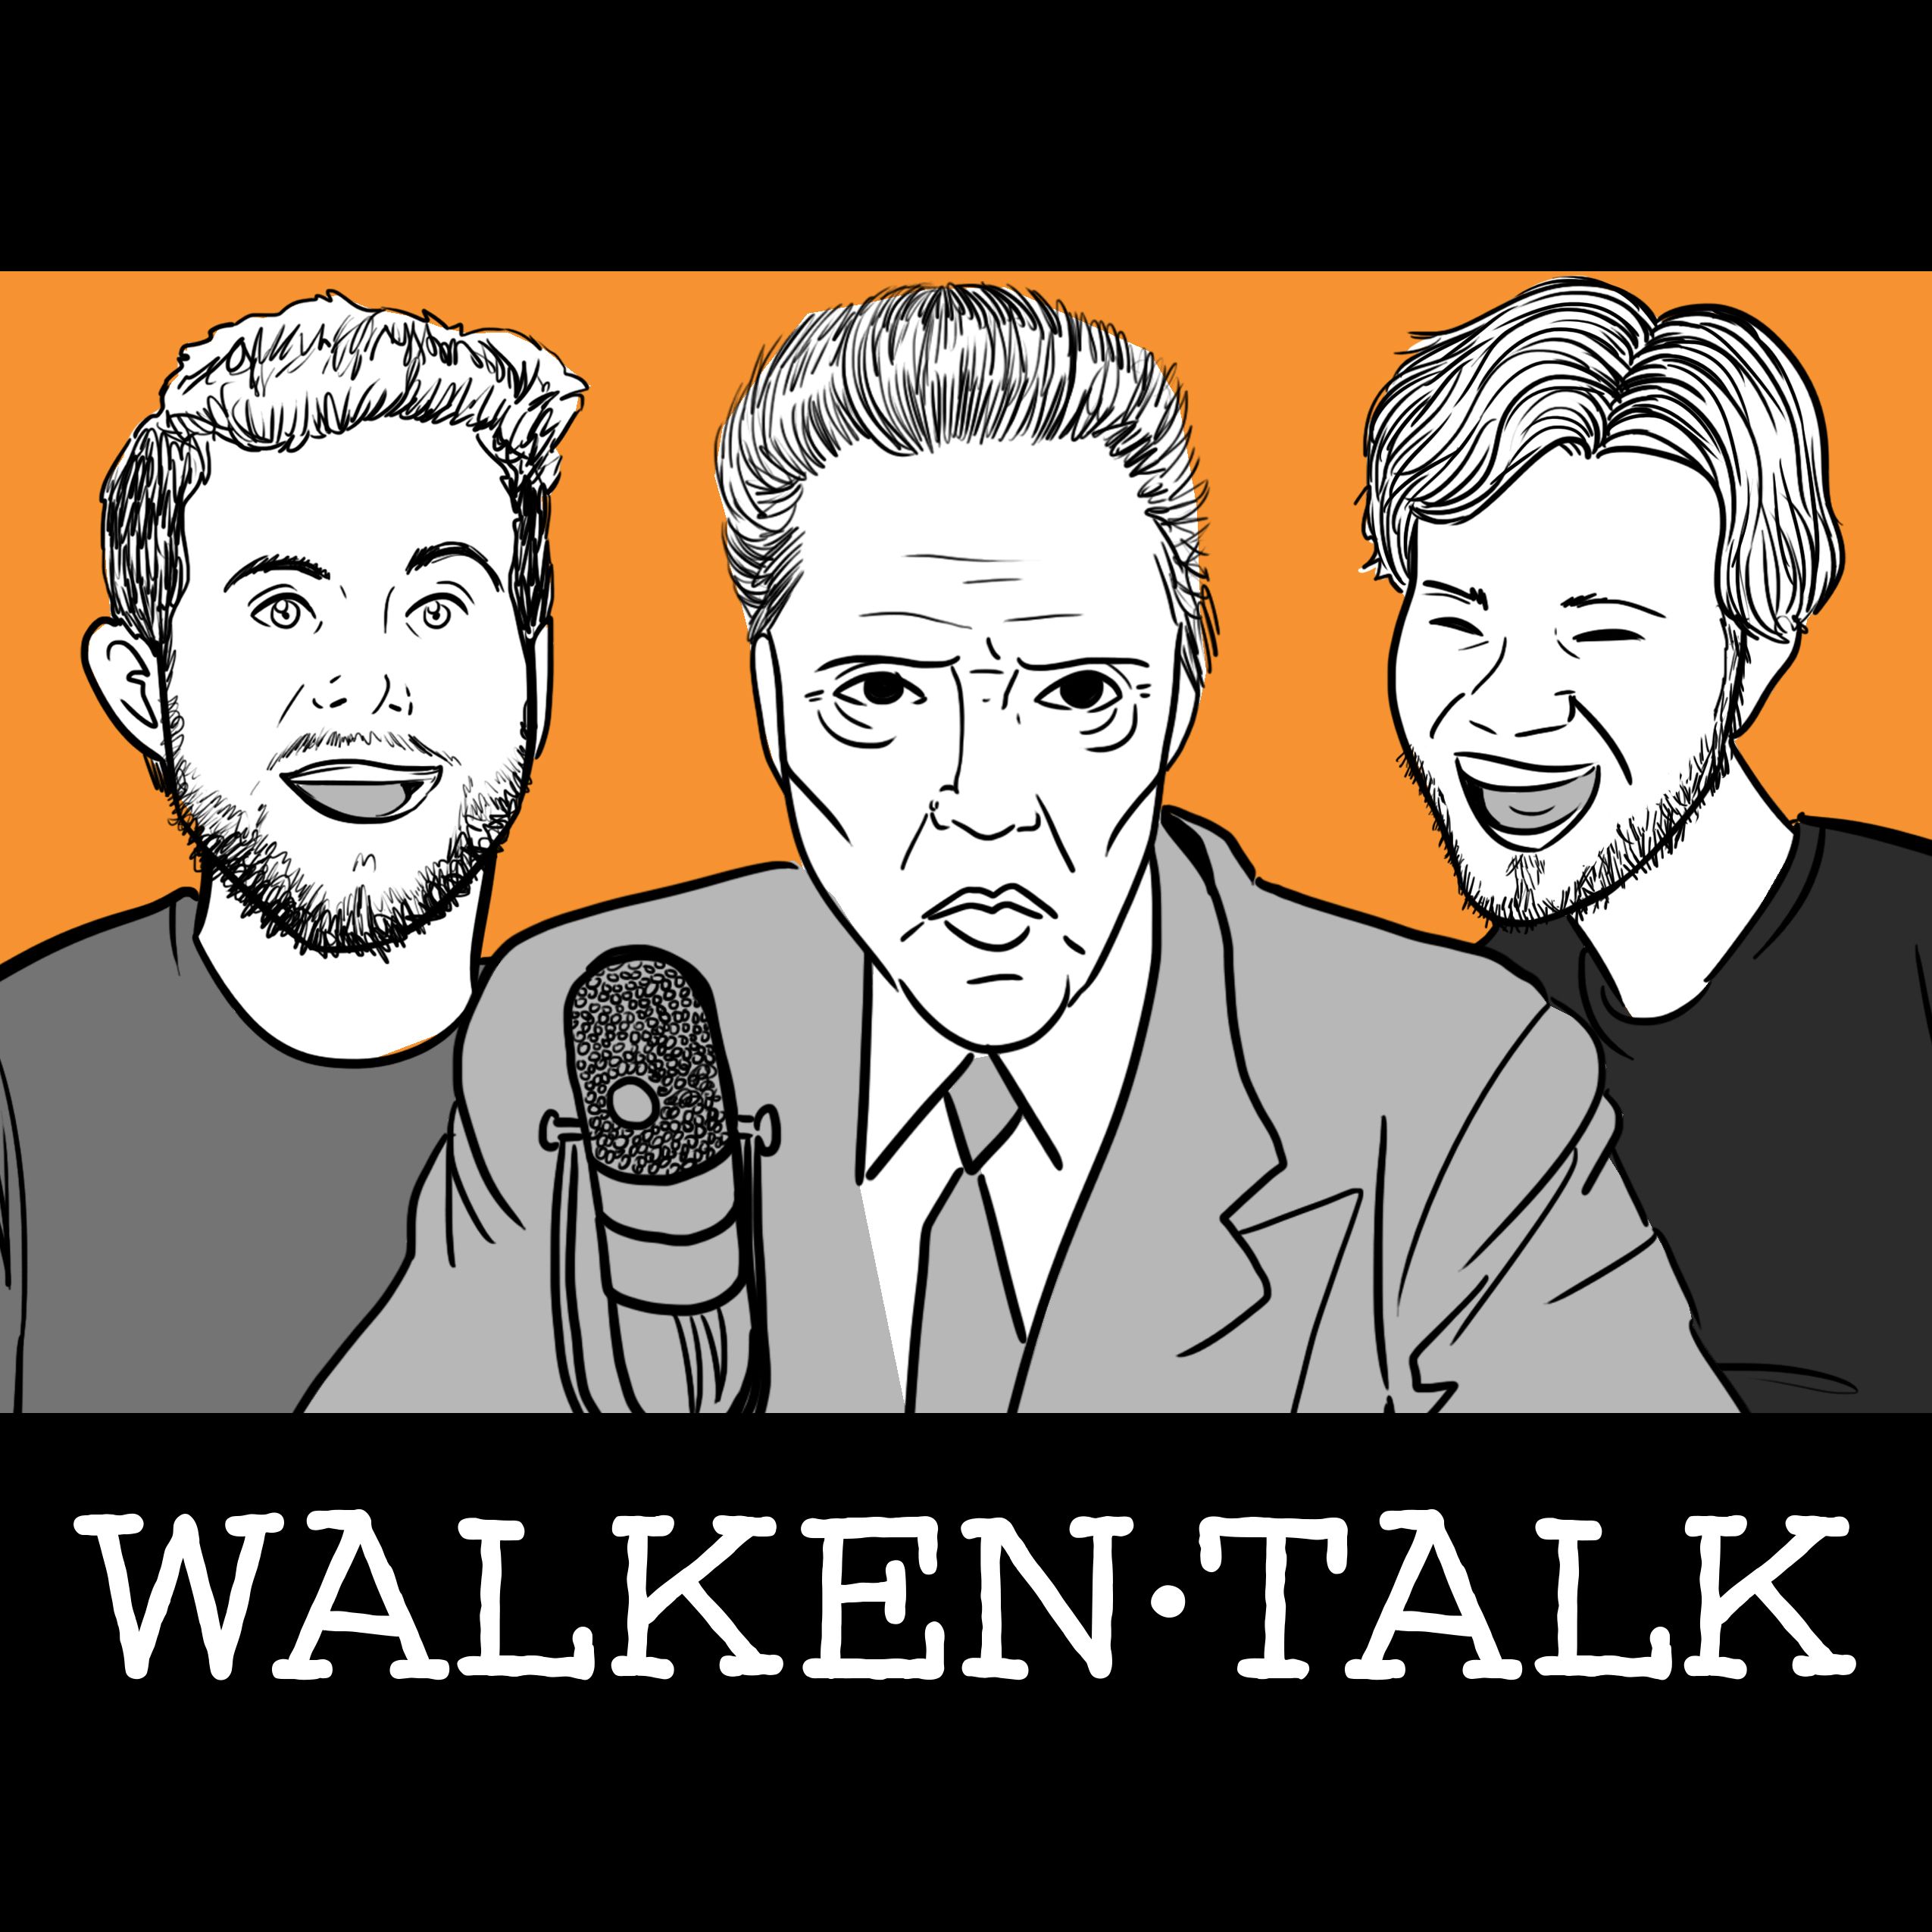 Walken Talk